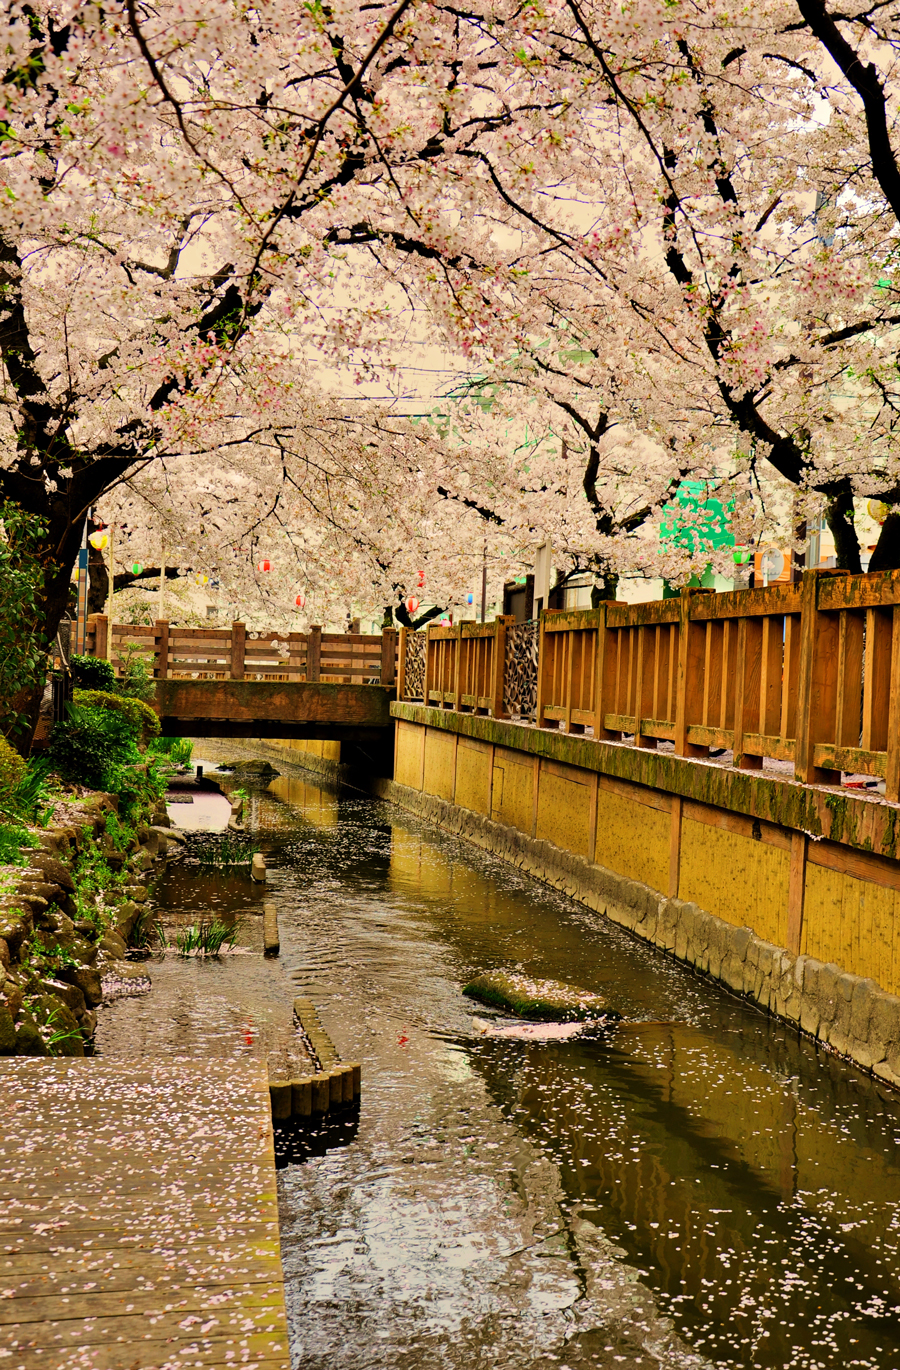 Falling cherry blossoms, Shukugawara, Kanagawa Pref.